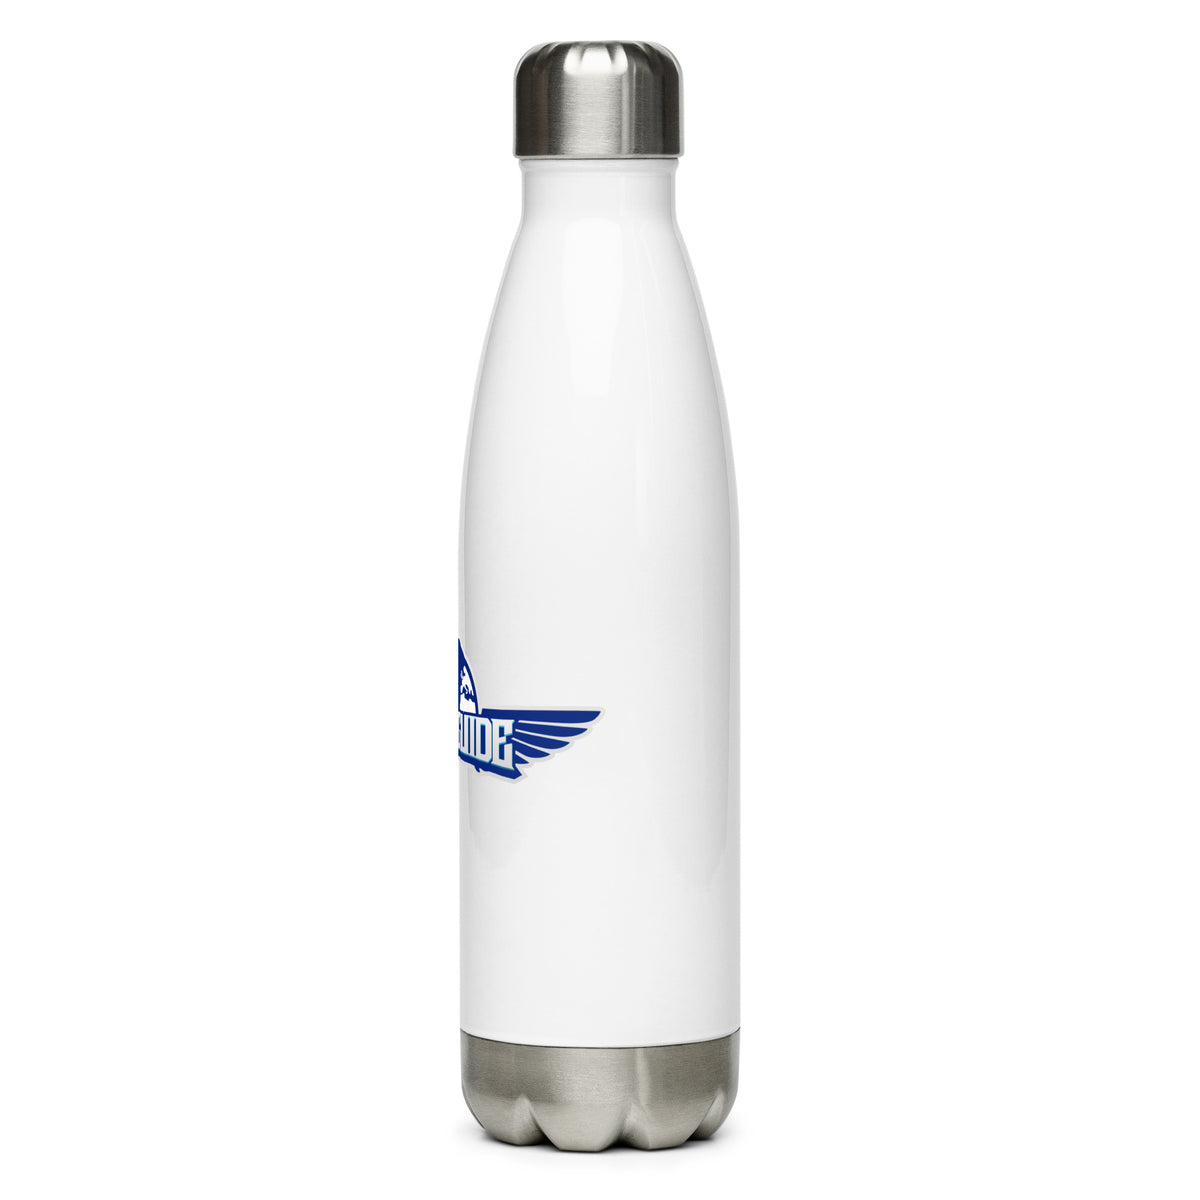 TG Stainless Steel Water Bottle